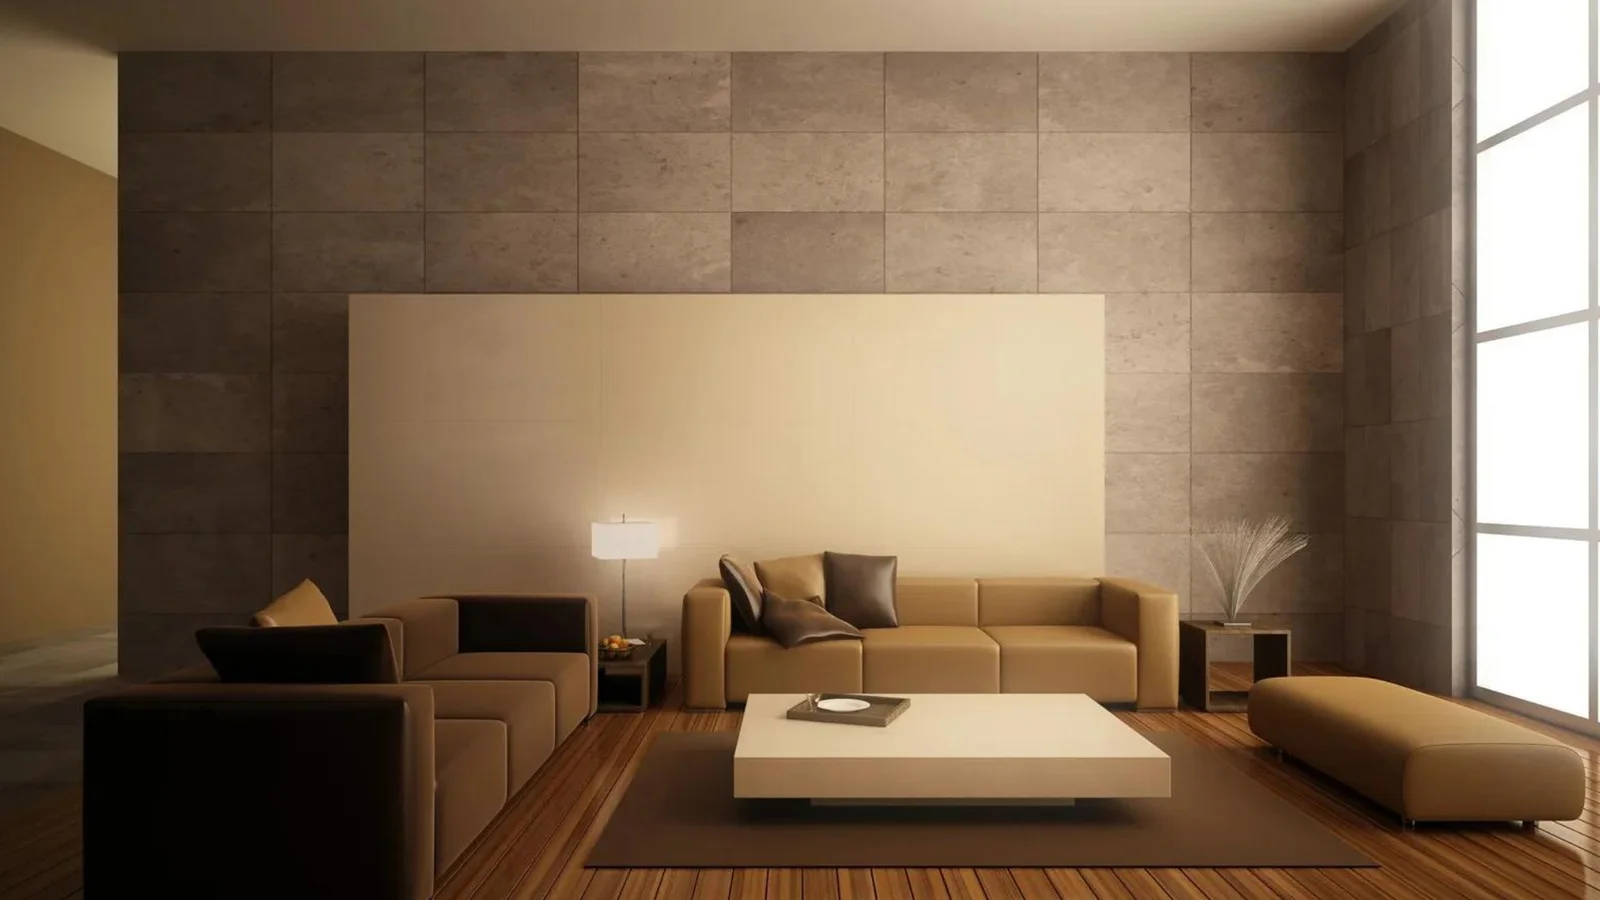 A brown minimalist bedroom décor